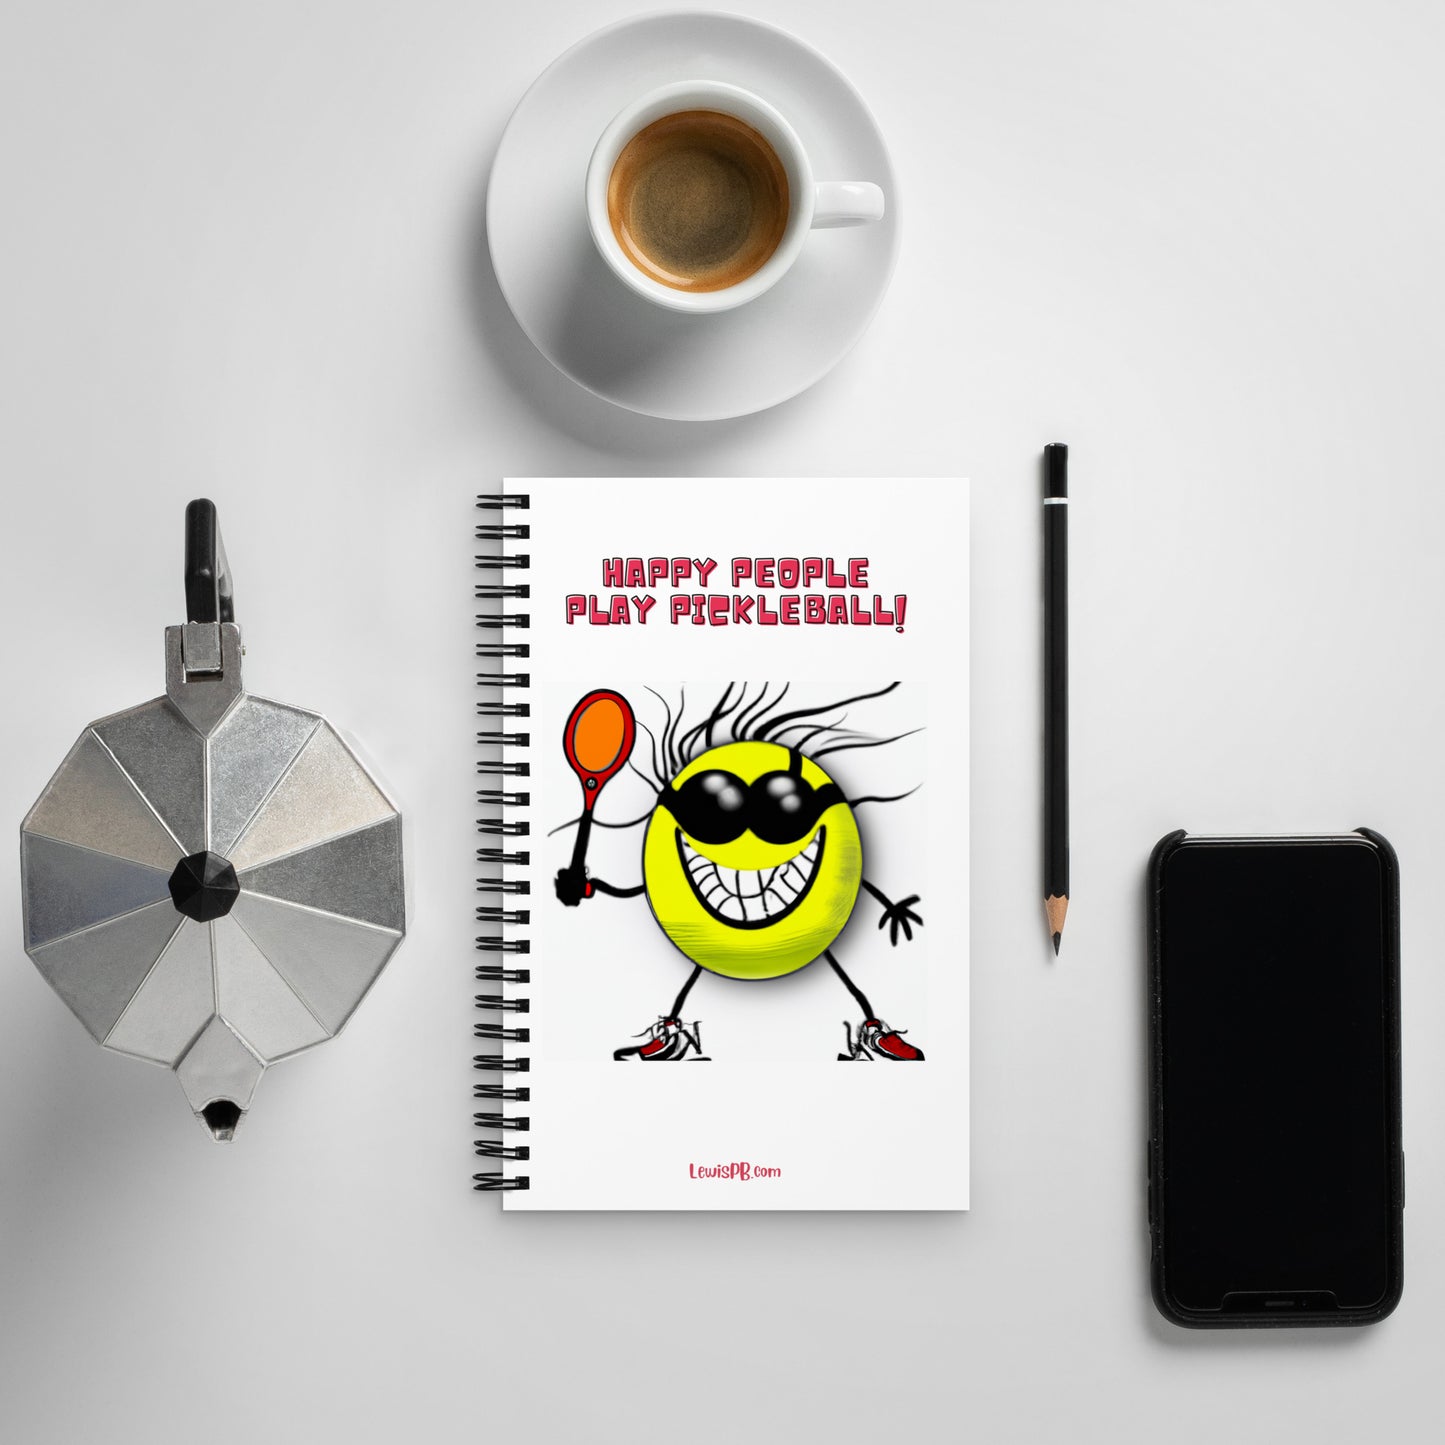 Pickleball Spiral Notebook | "Happy People Play Pickleball"